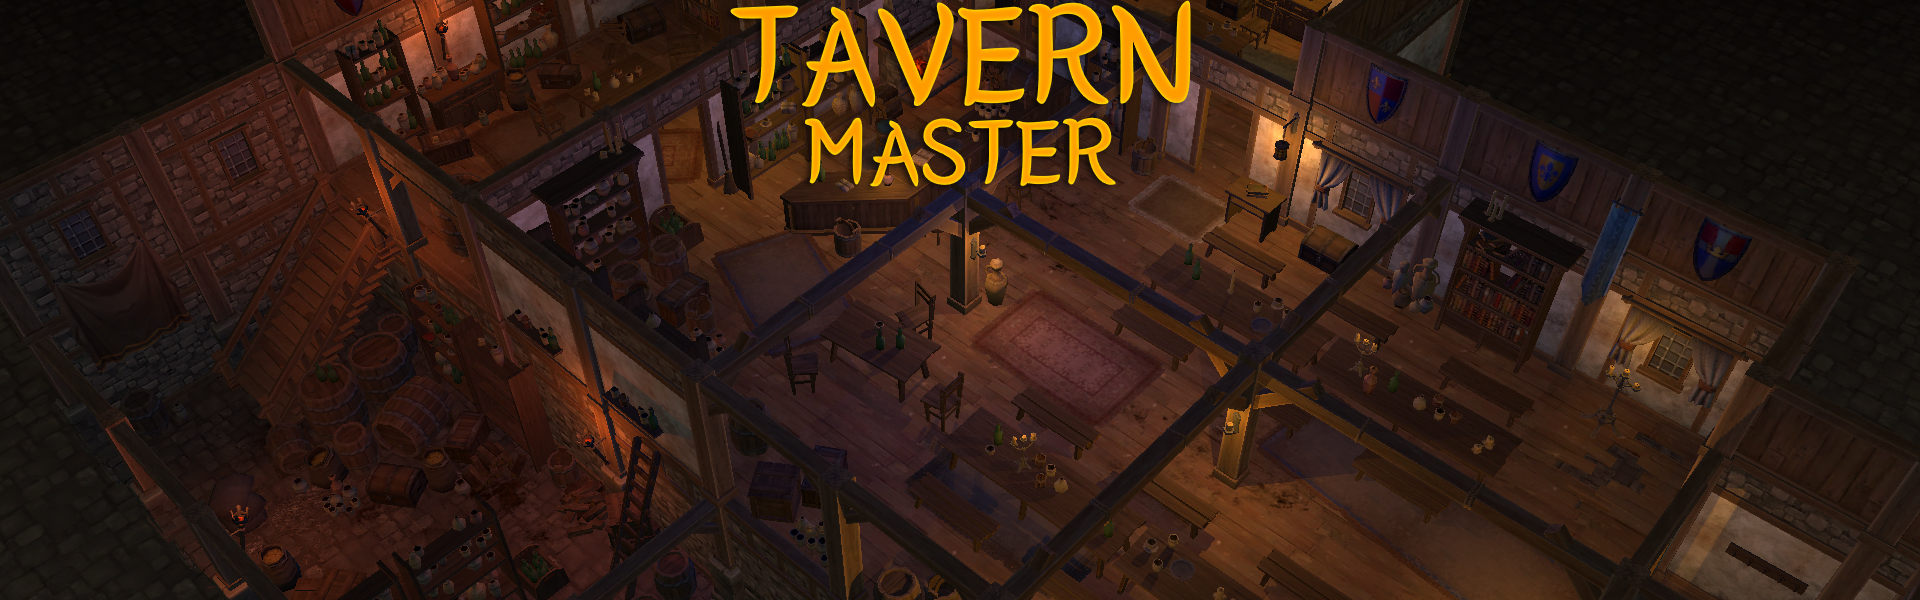 tavern master online game